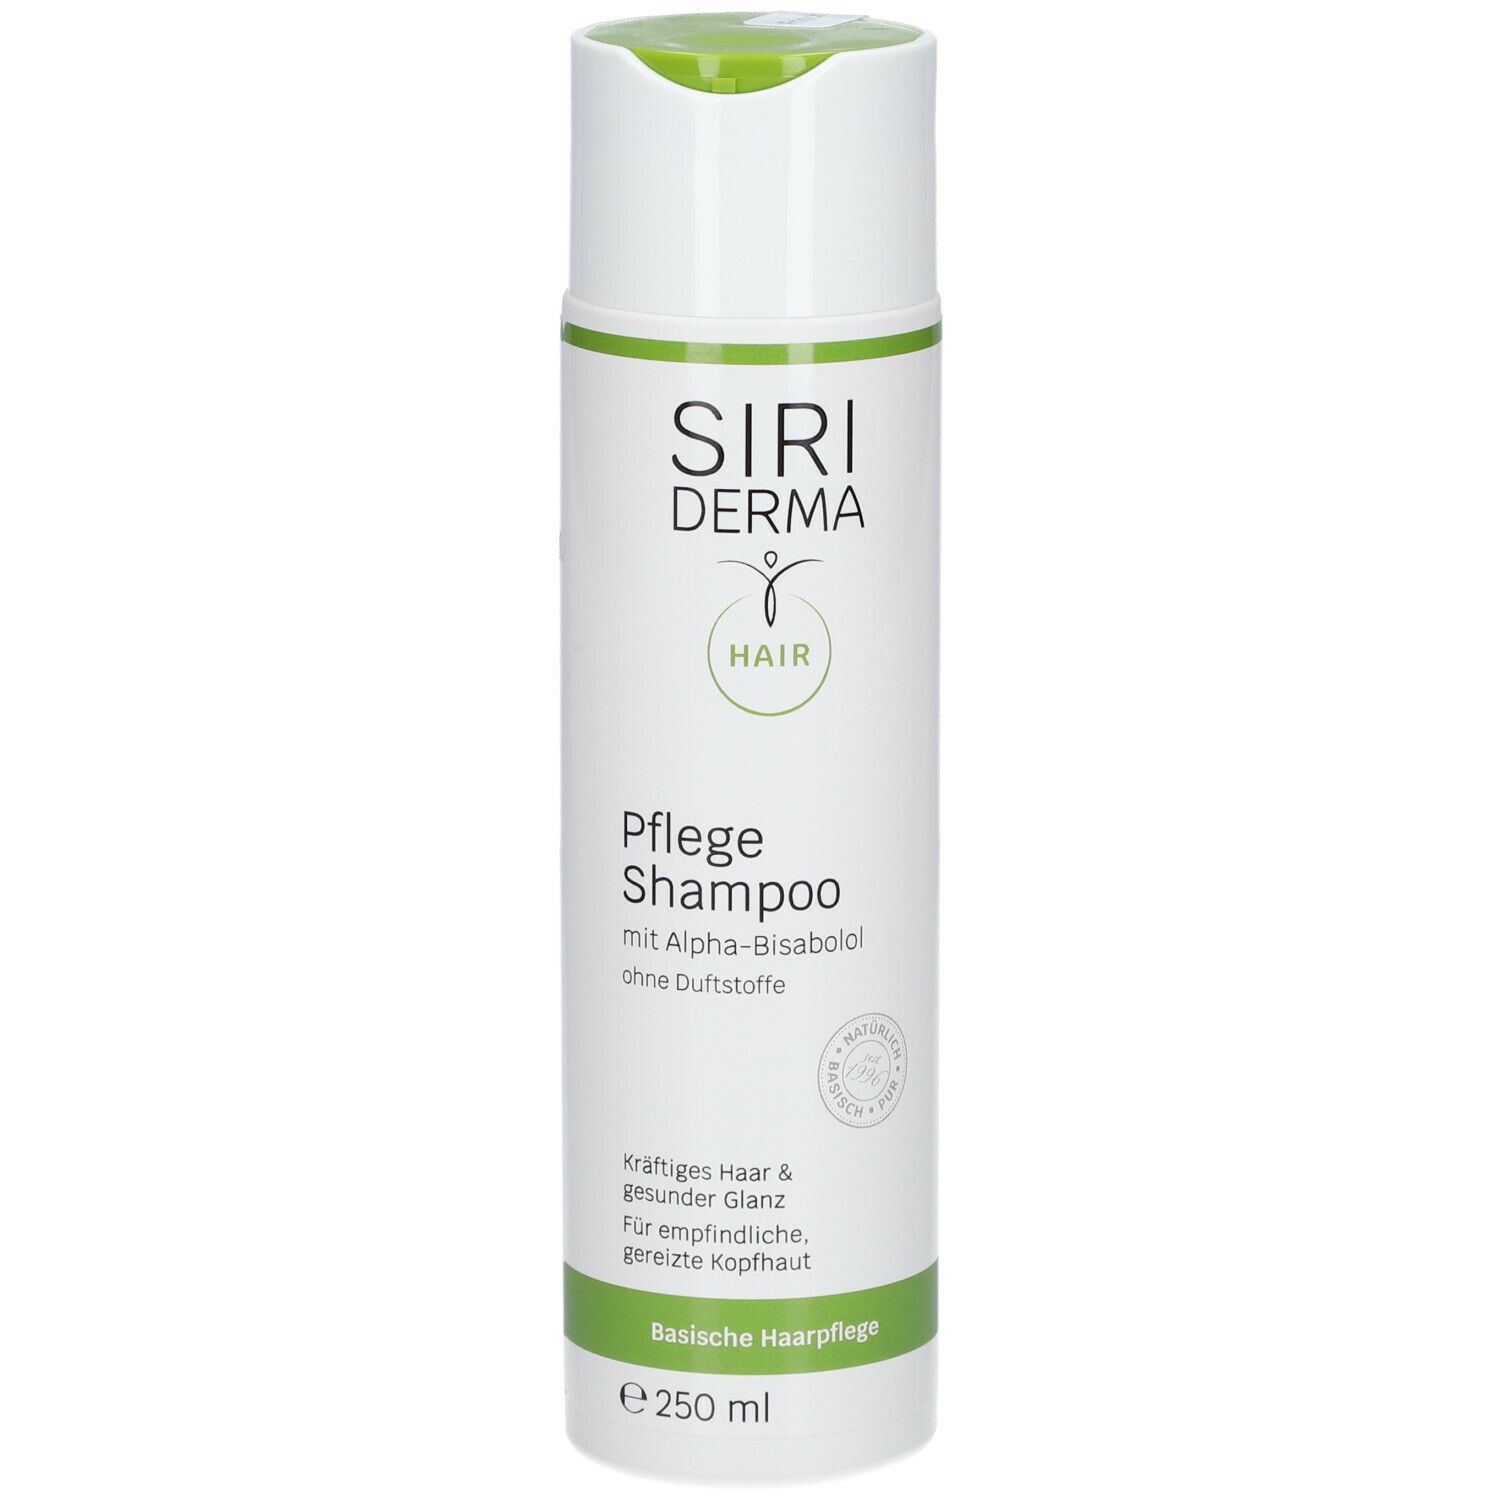 SIRIDERMA Pflege Shampoo ohne Duftstoffe